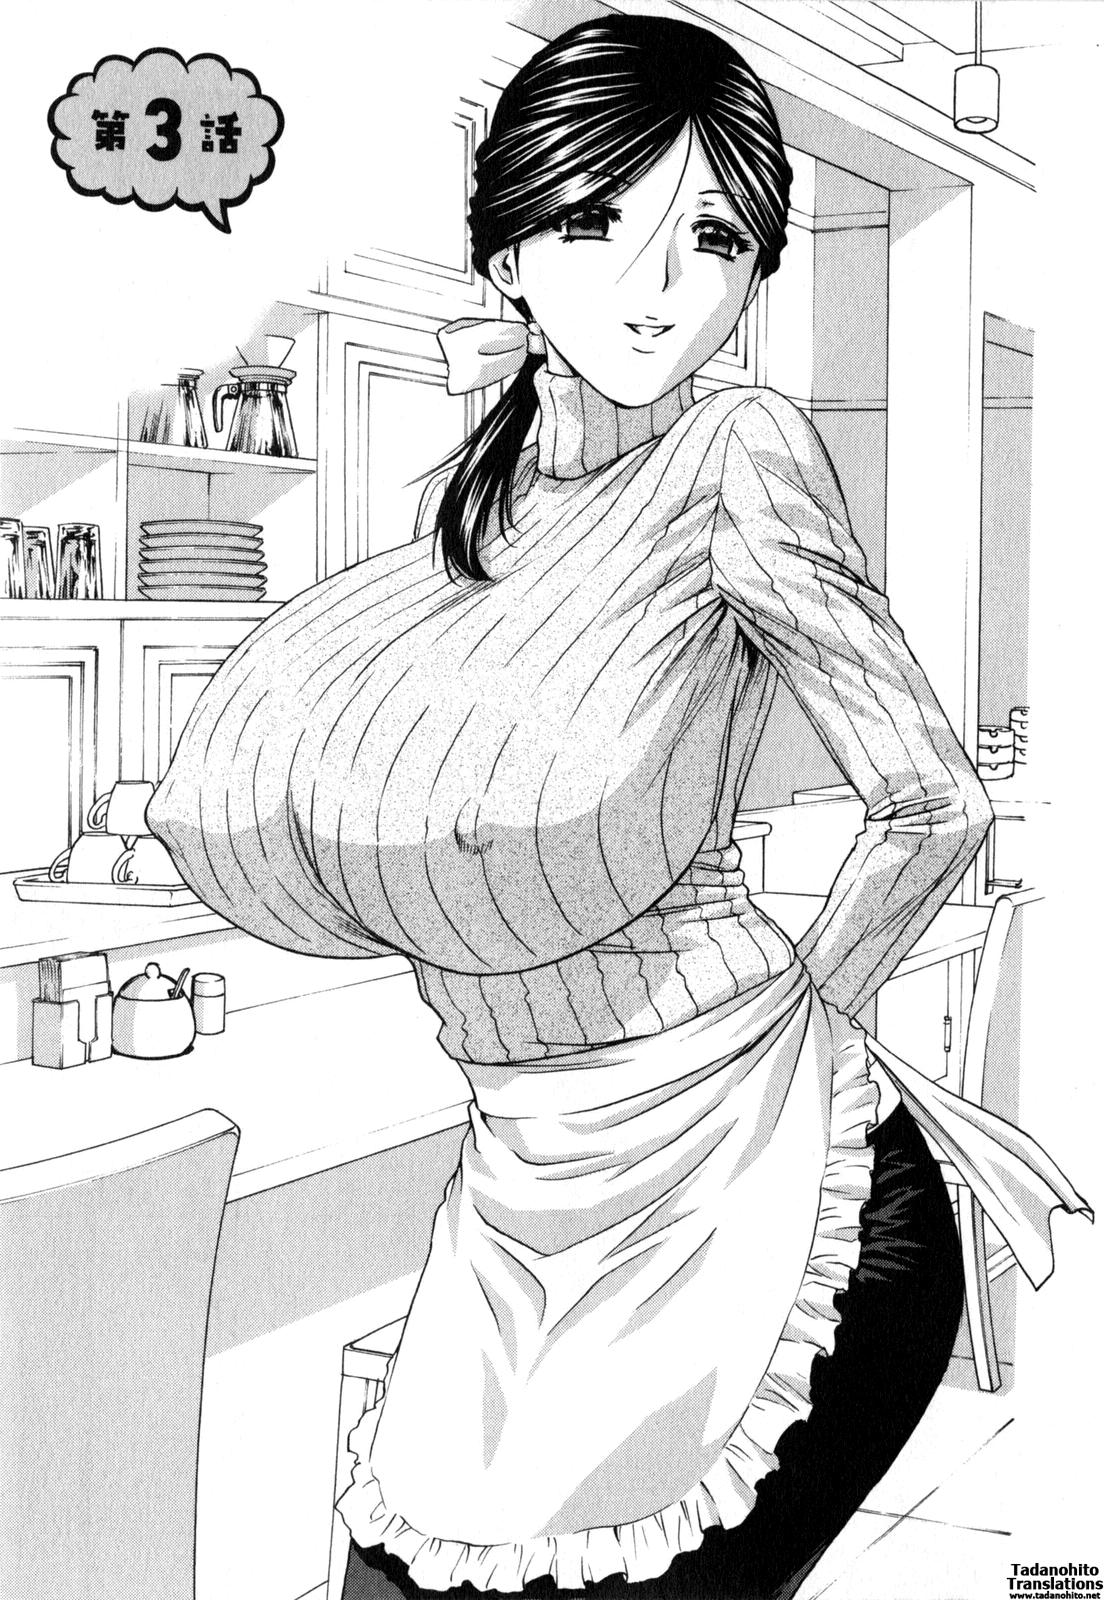 [Hidemaru] Life with Married Women Just Like a Manga 2 - Ch. 1-5 [English] {Tadanohito} 46